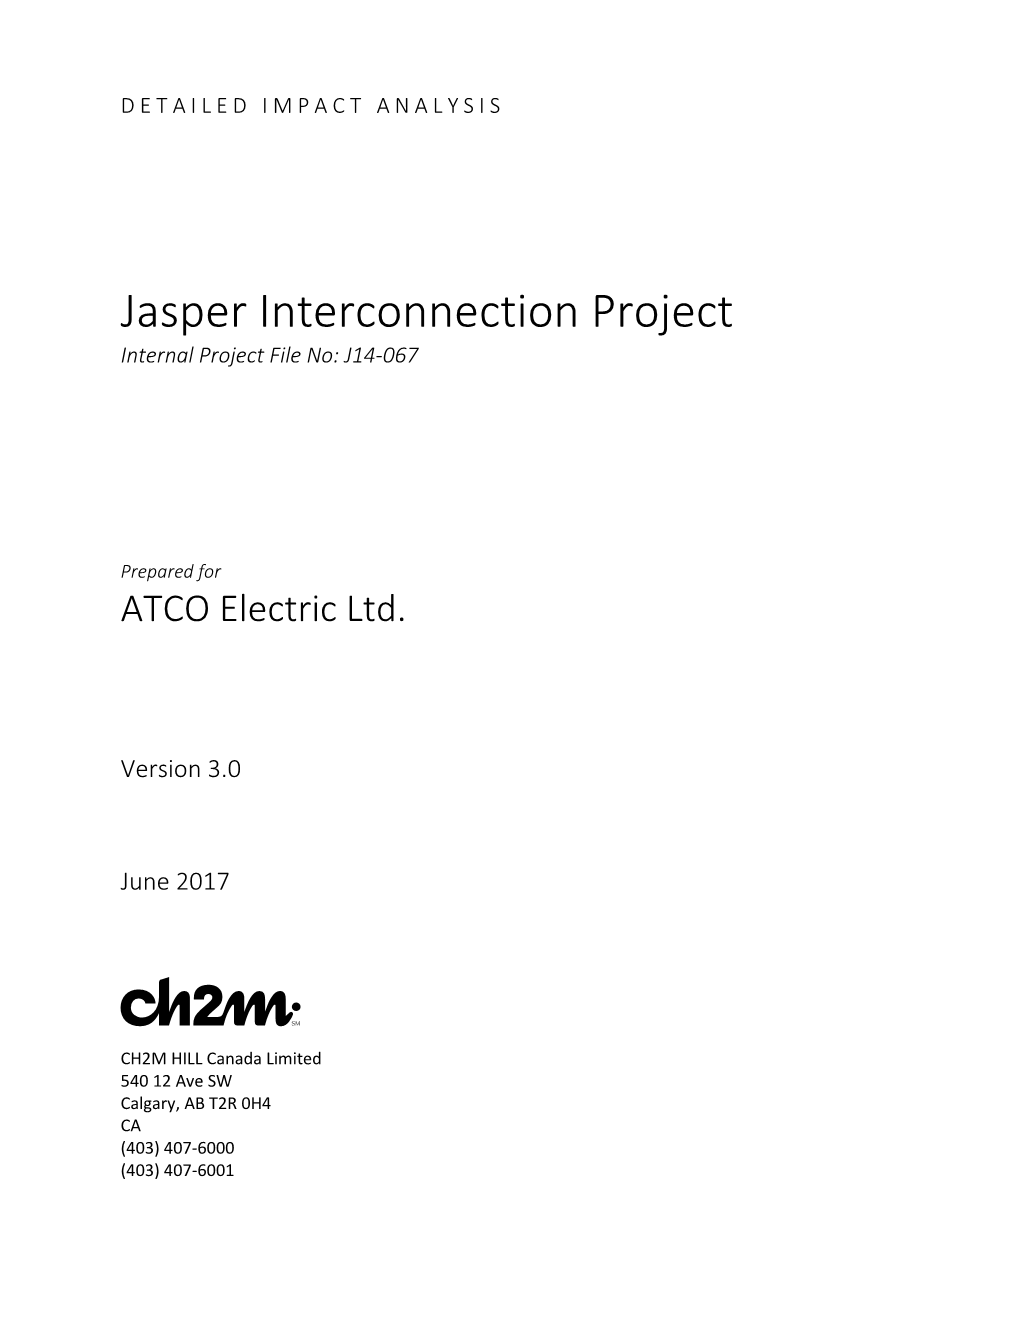 Jasper Interconnection Project Internal Project File No: J14-067